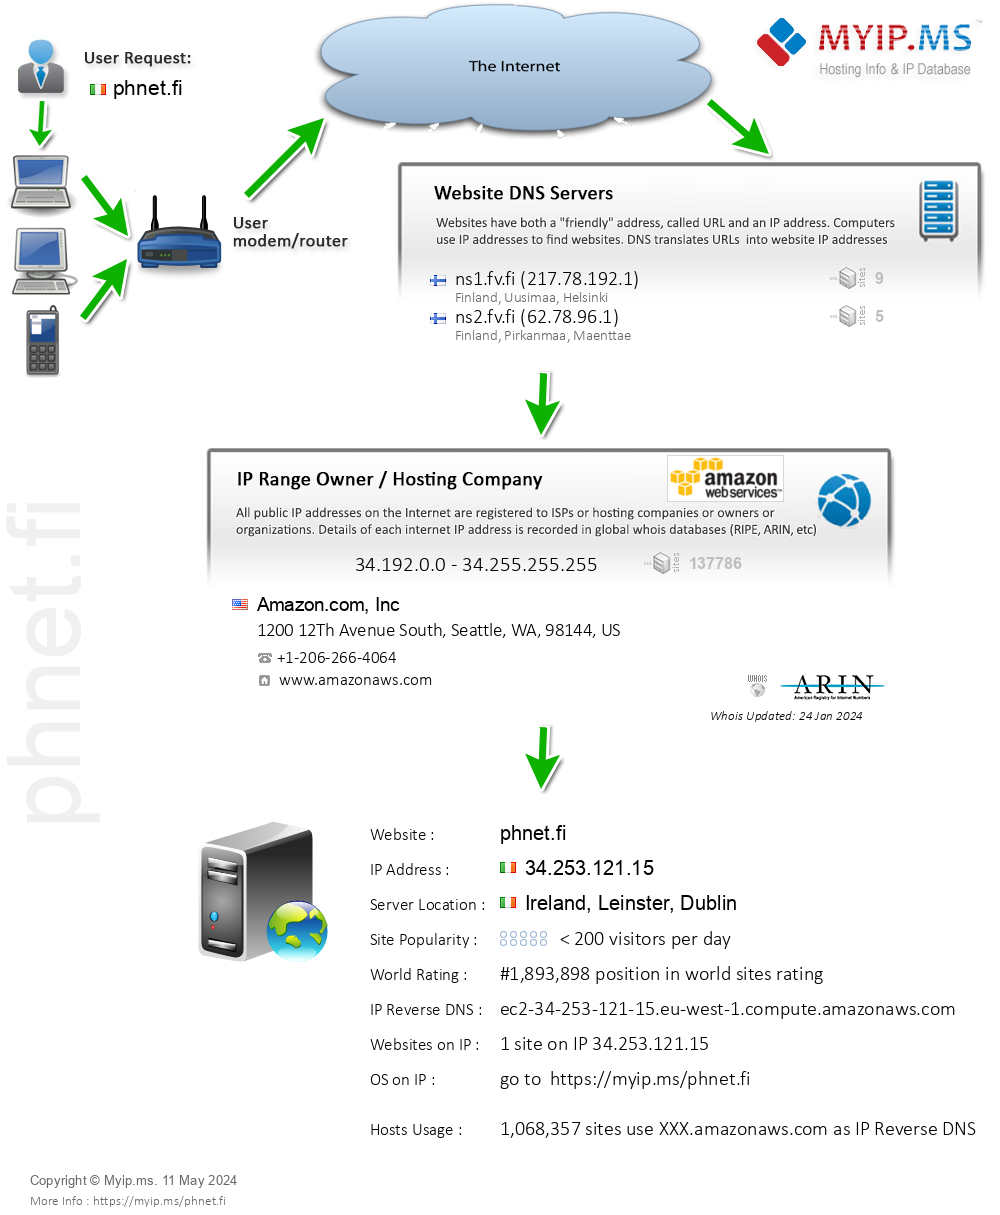 Phnet.fi - Website Hosting Visual IP Diagram